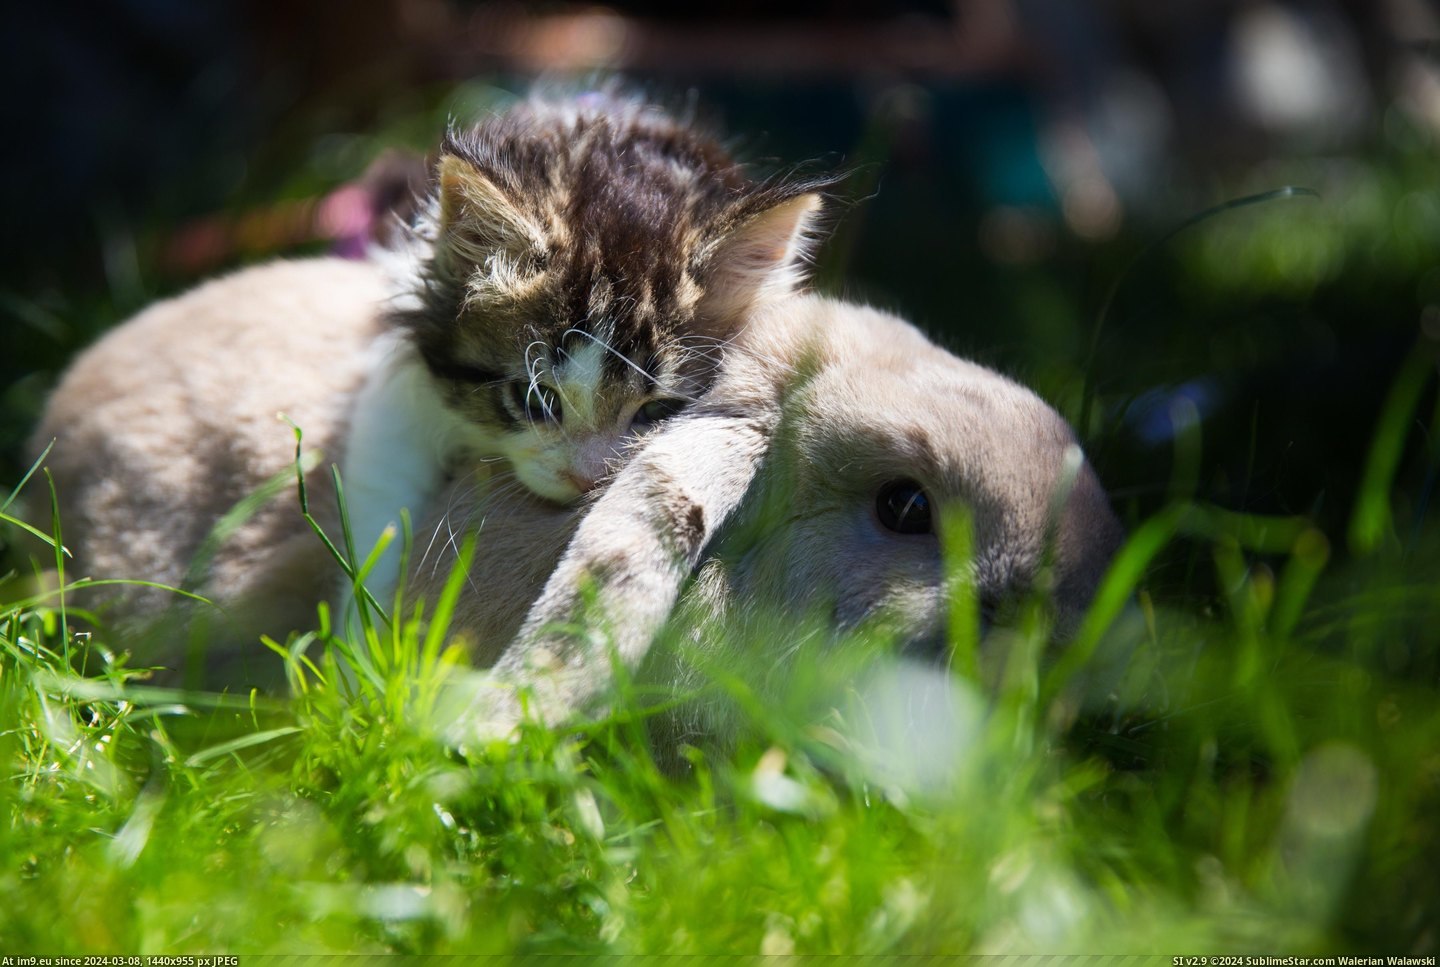 #Kitten #Rabbit #Pet [Aww] My rabbit has a pet kitten. Pic. (Bild von album My r/AWW favs))